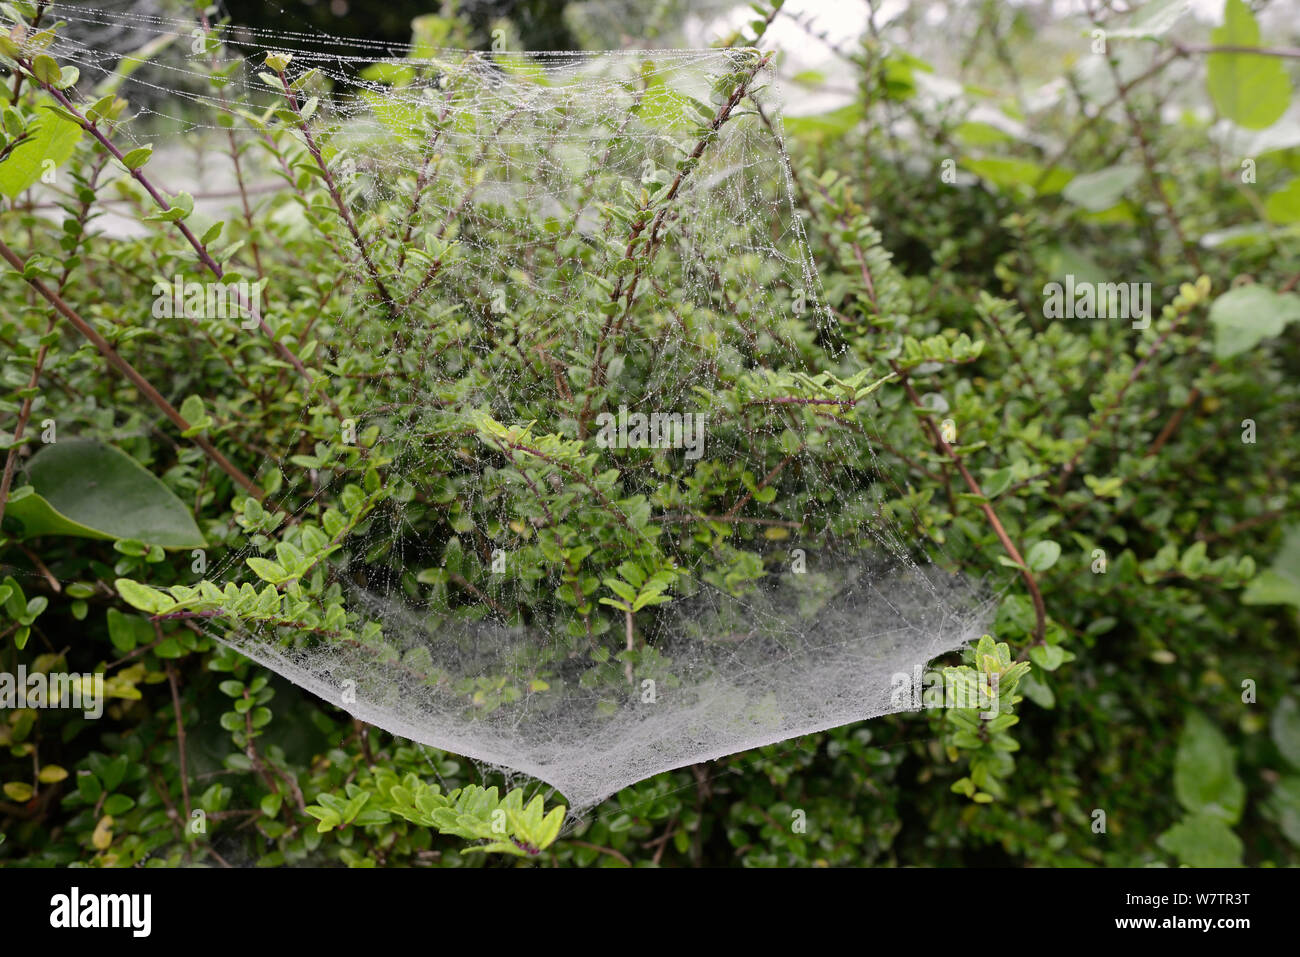 Hammock web of money spider / Hammock-weaver (Linyphidae) suspended by numerous tangled silk strands, Wiltshire garden hedge, UK, September. Stock Photo